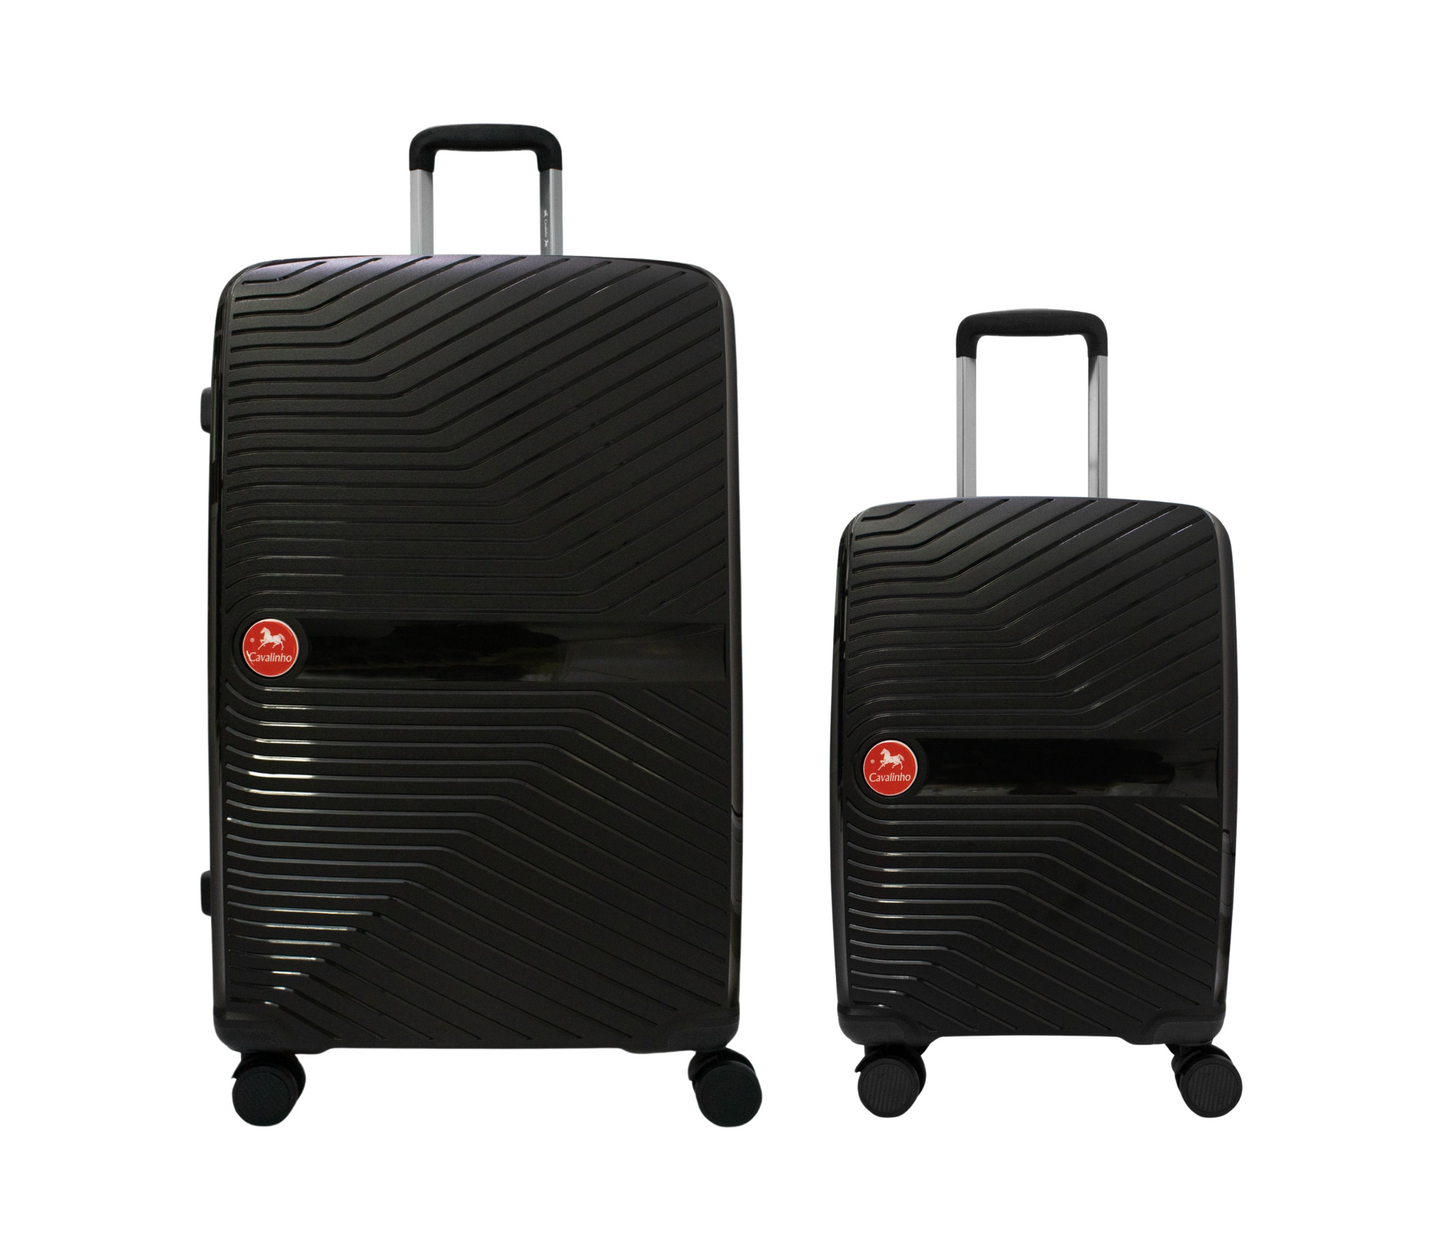 Cavalinho Colorful 2 Piece Luggage Set (19" & 28") - Black Black - 68020004.0101.S1928._1